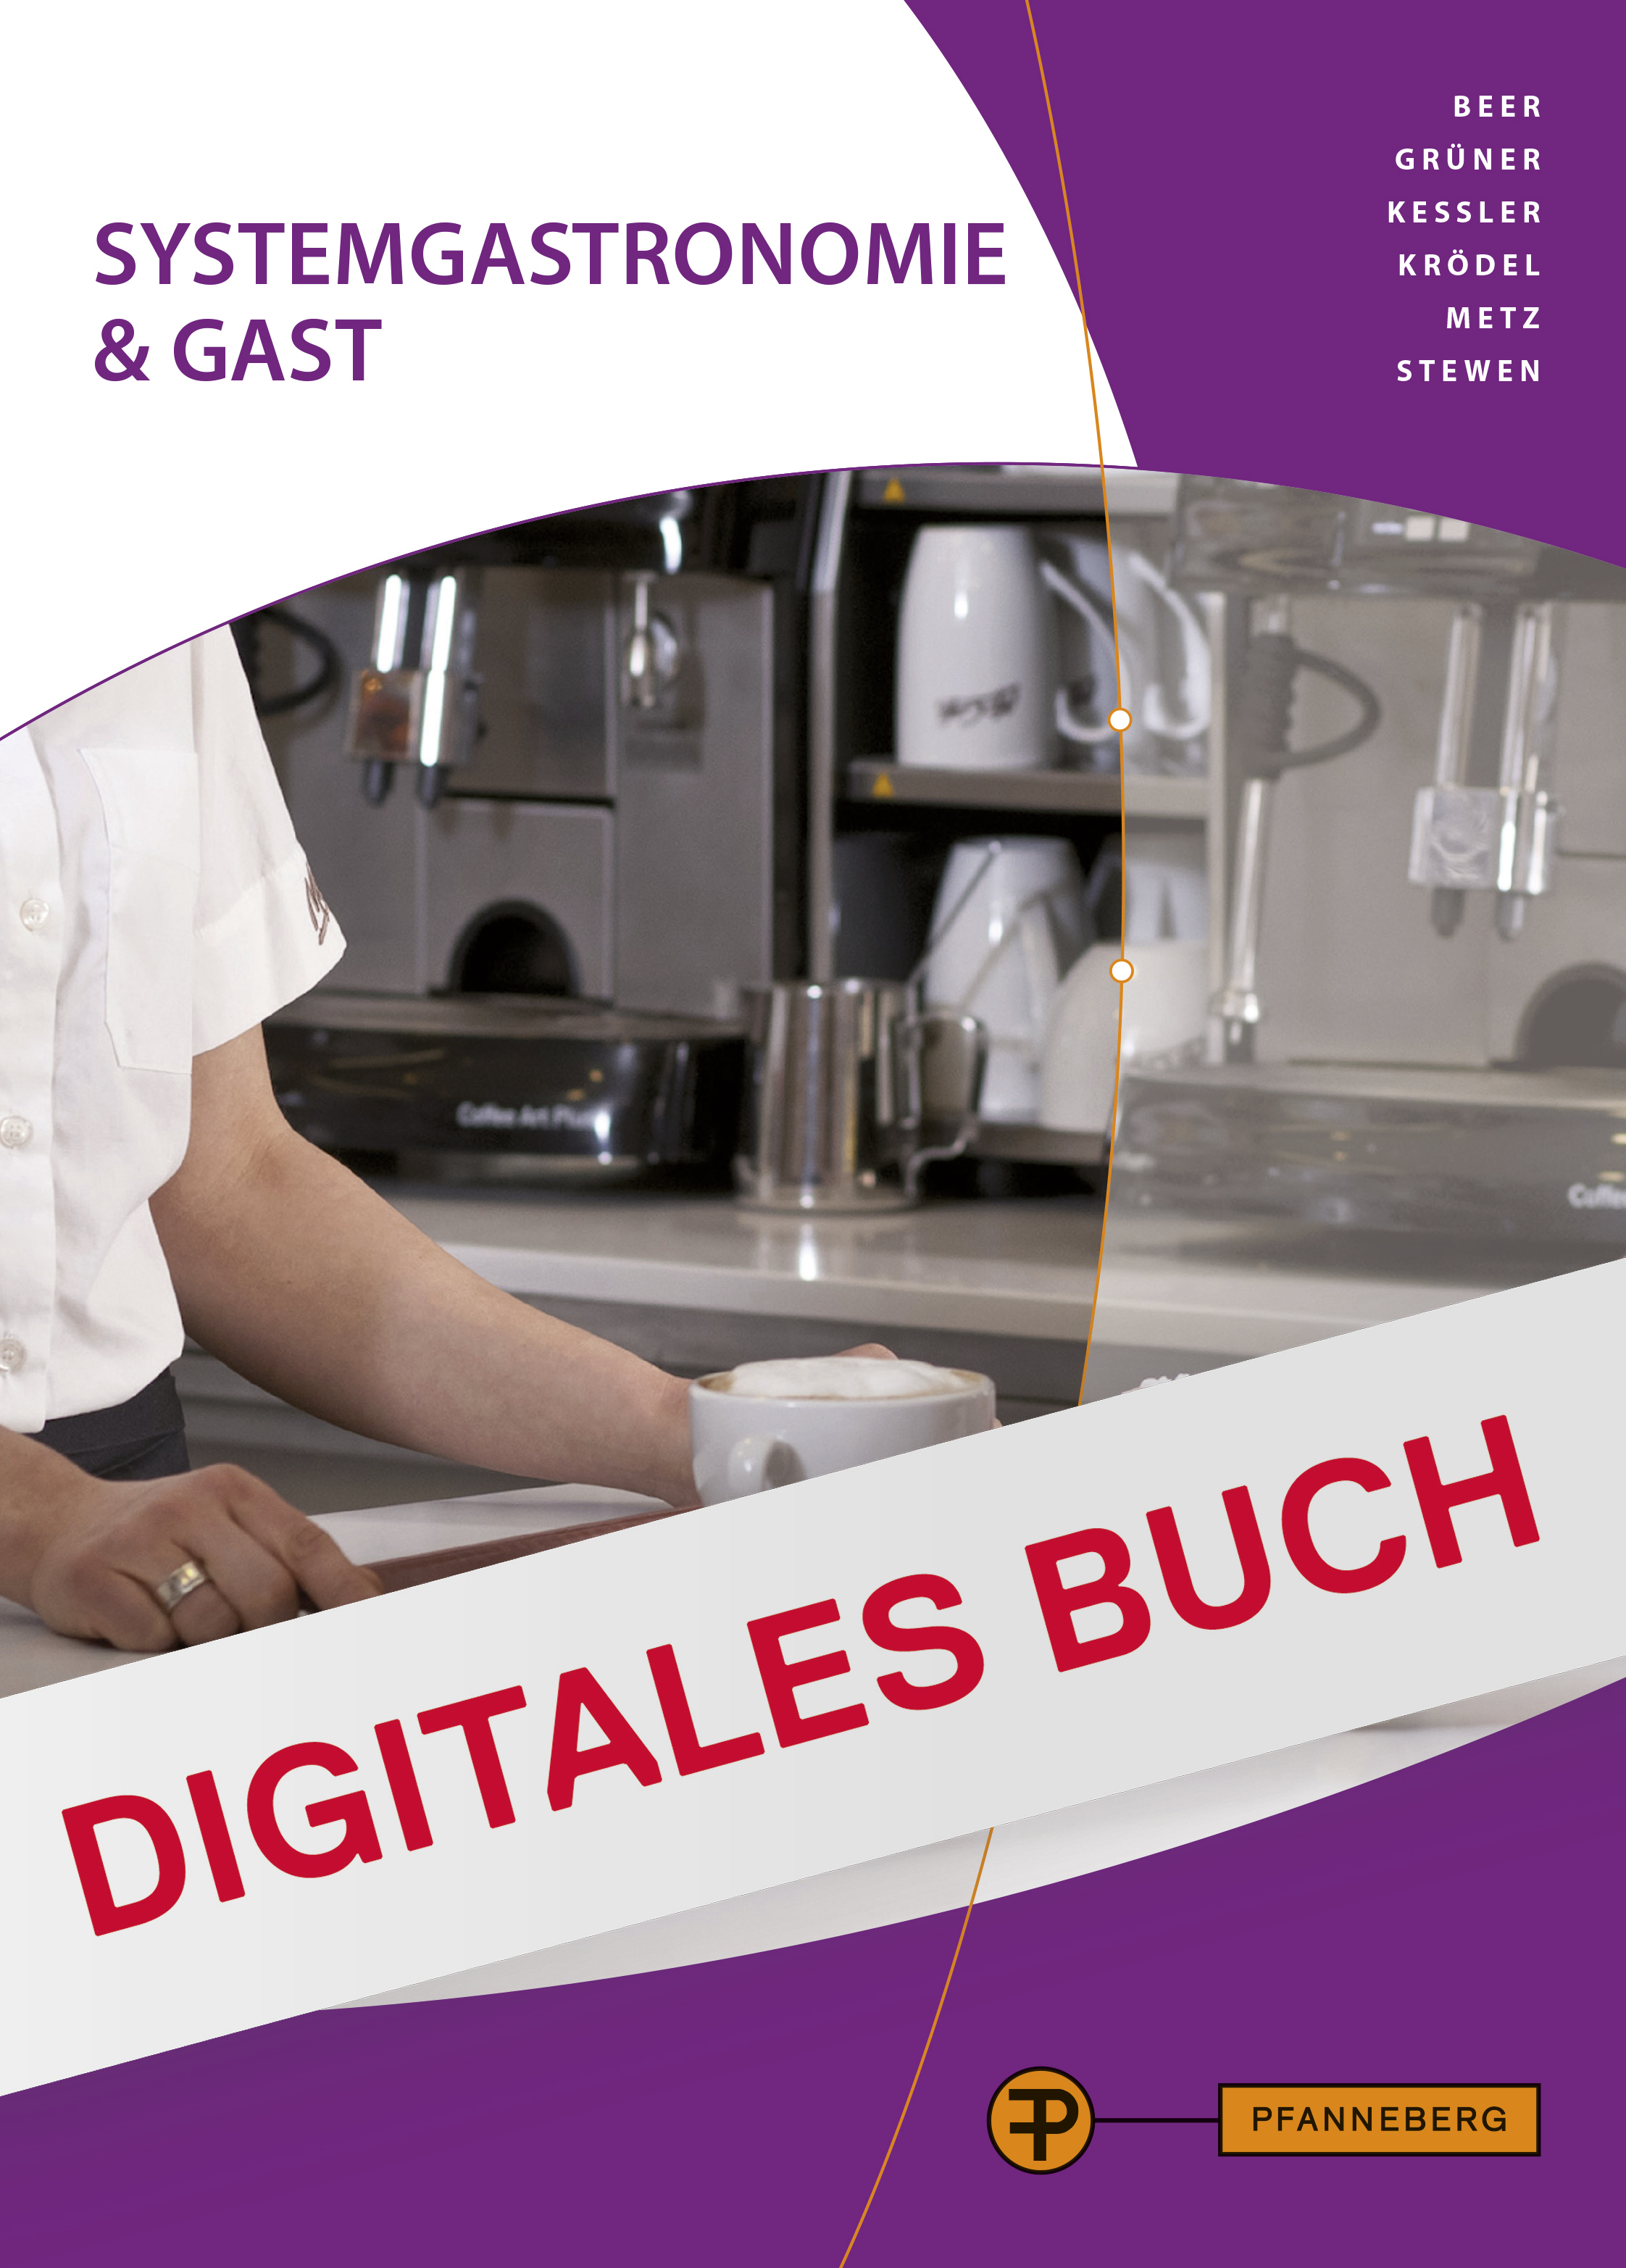 Systemgastronomie & Gast - Digitales Buch